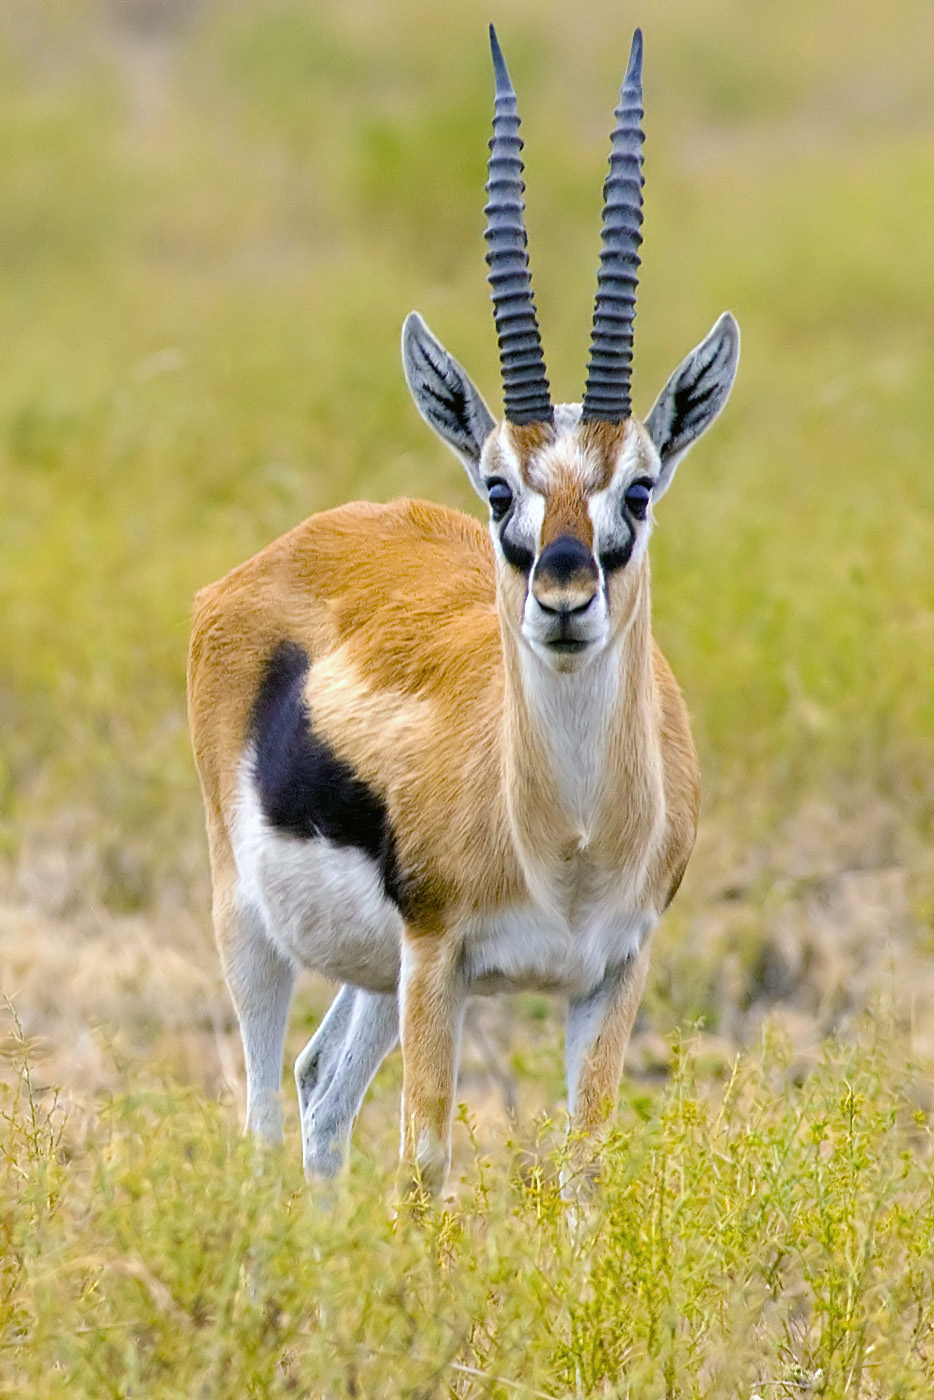  Thomson gazella